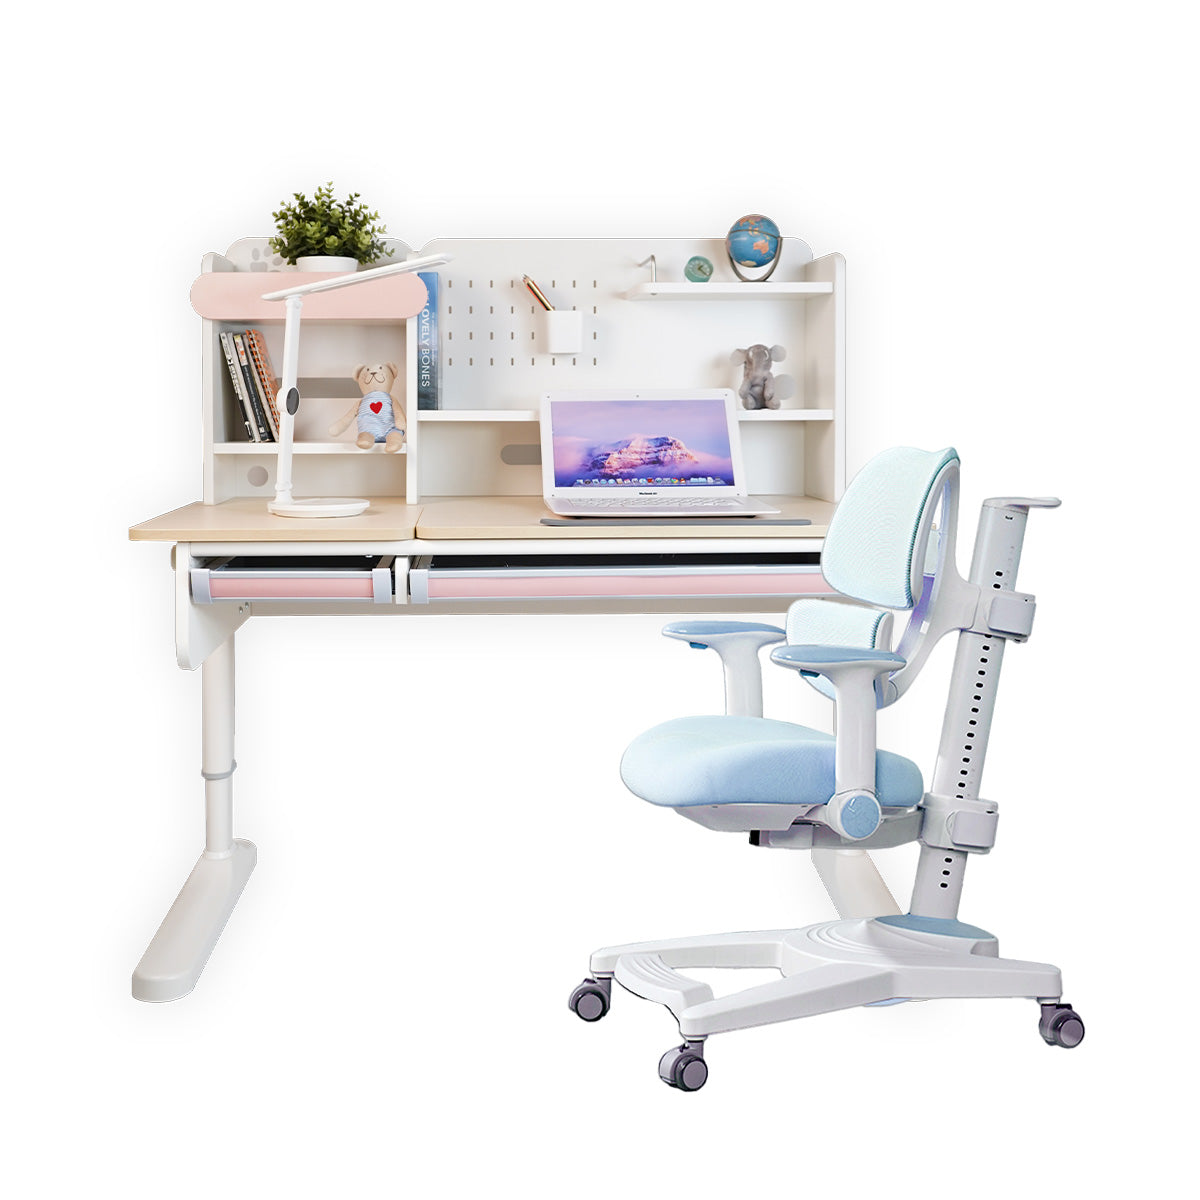 Impact Ergo-Growing Study Desk And Chair Set 1200mm x 650mm, IM-G1200-PK